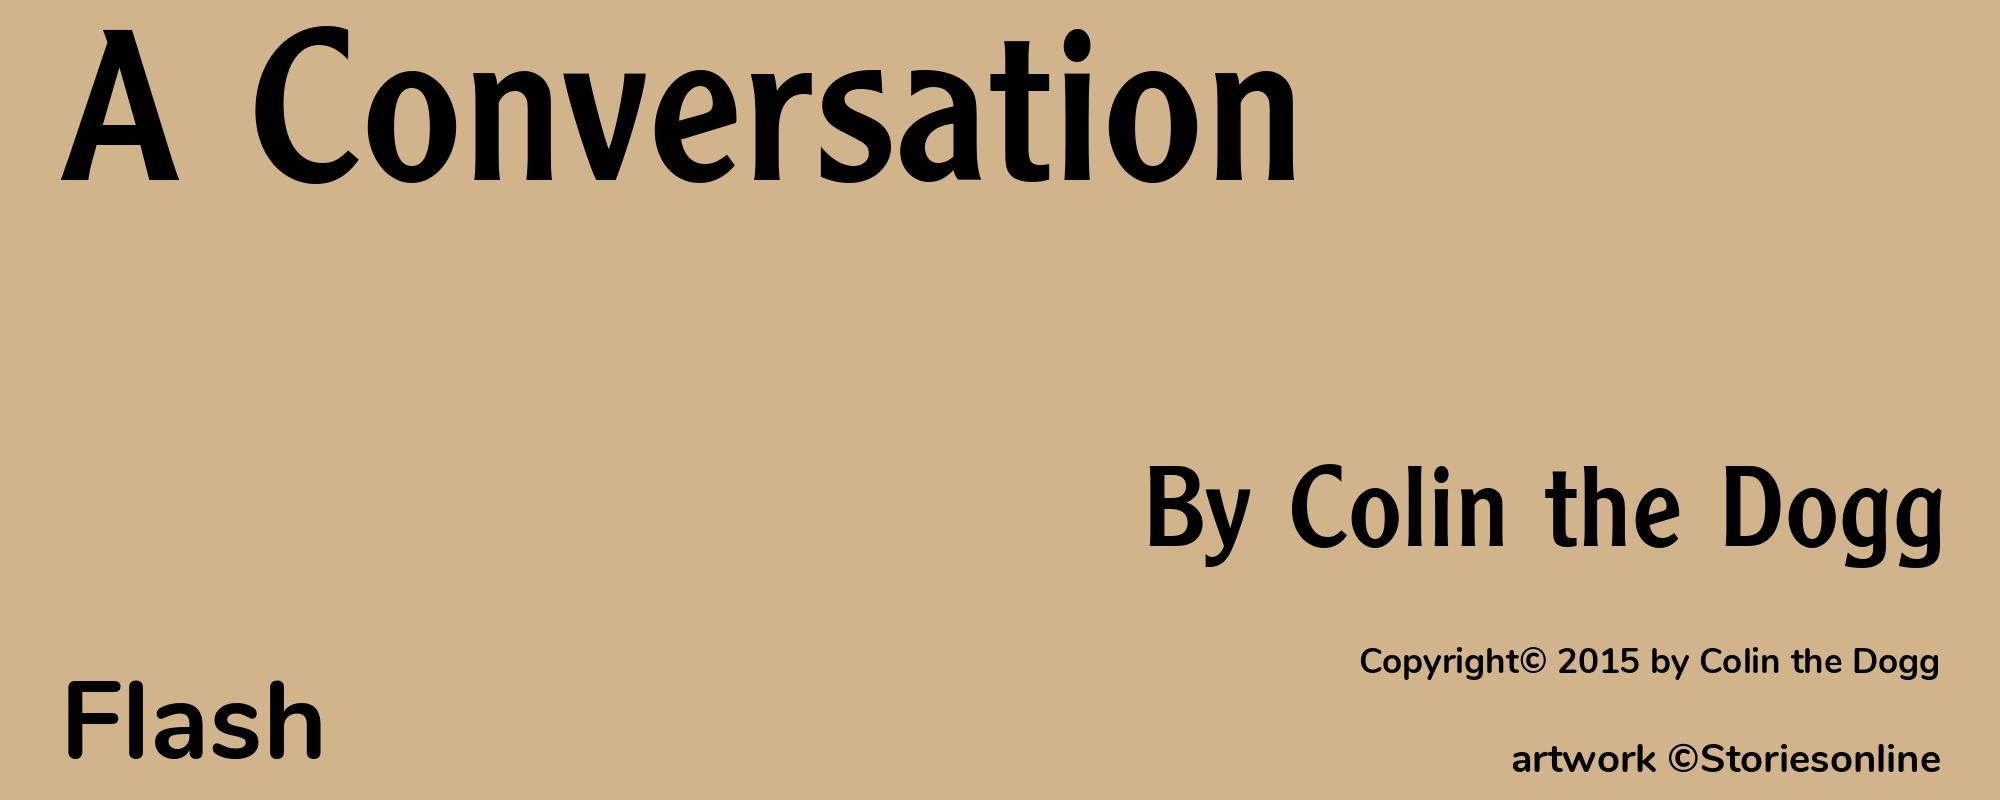 A Conversation - Cover